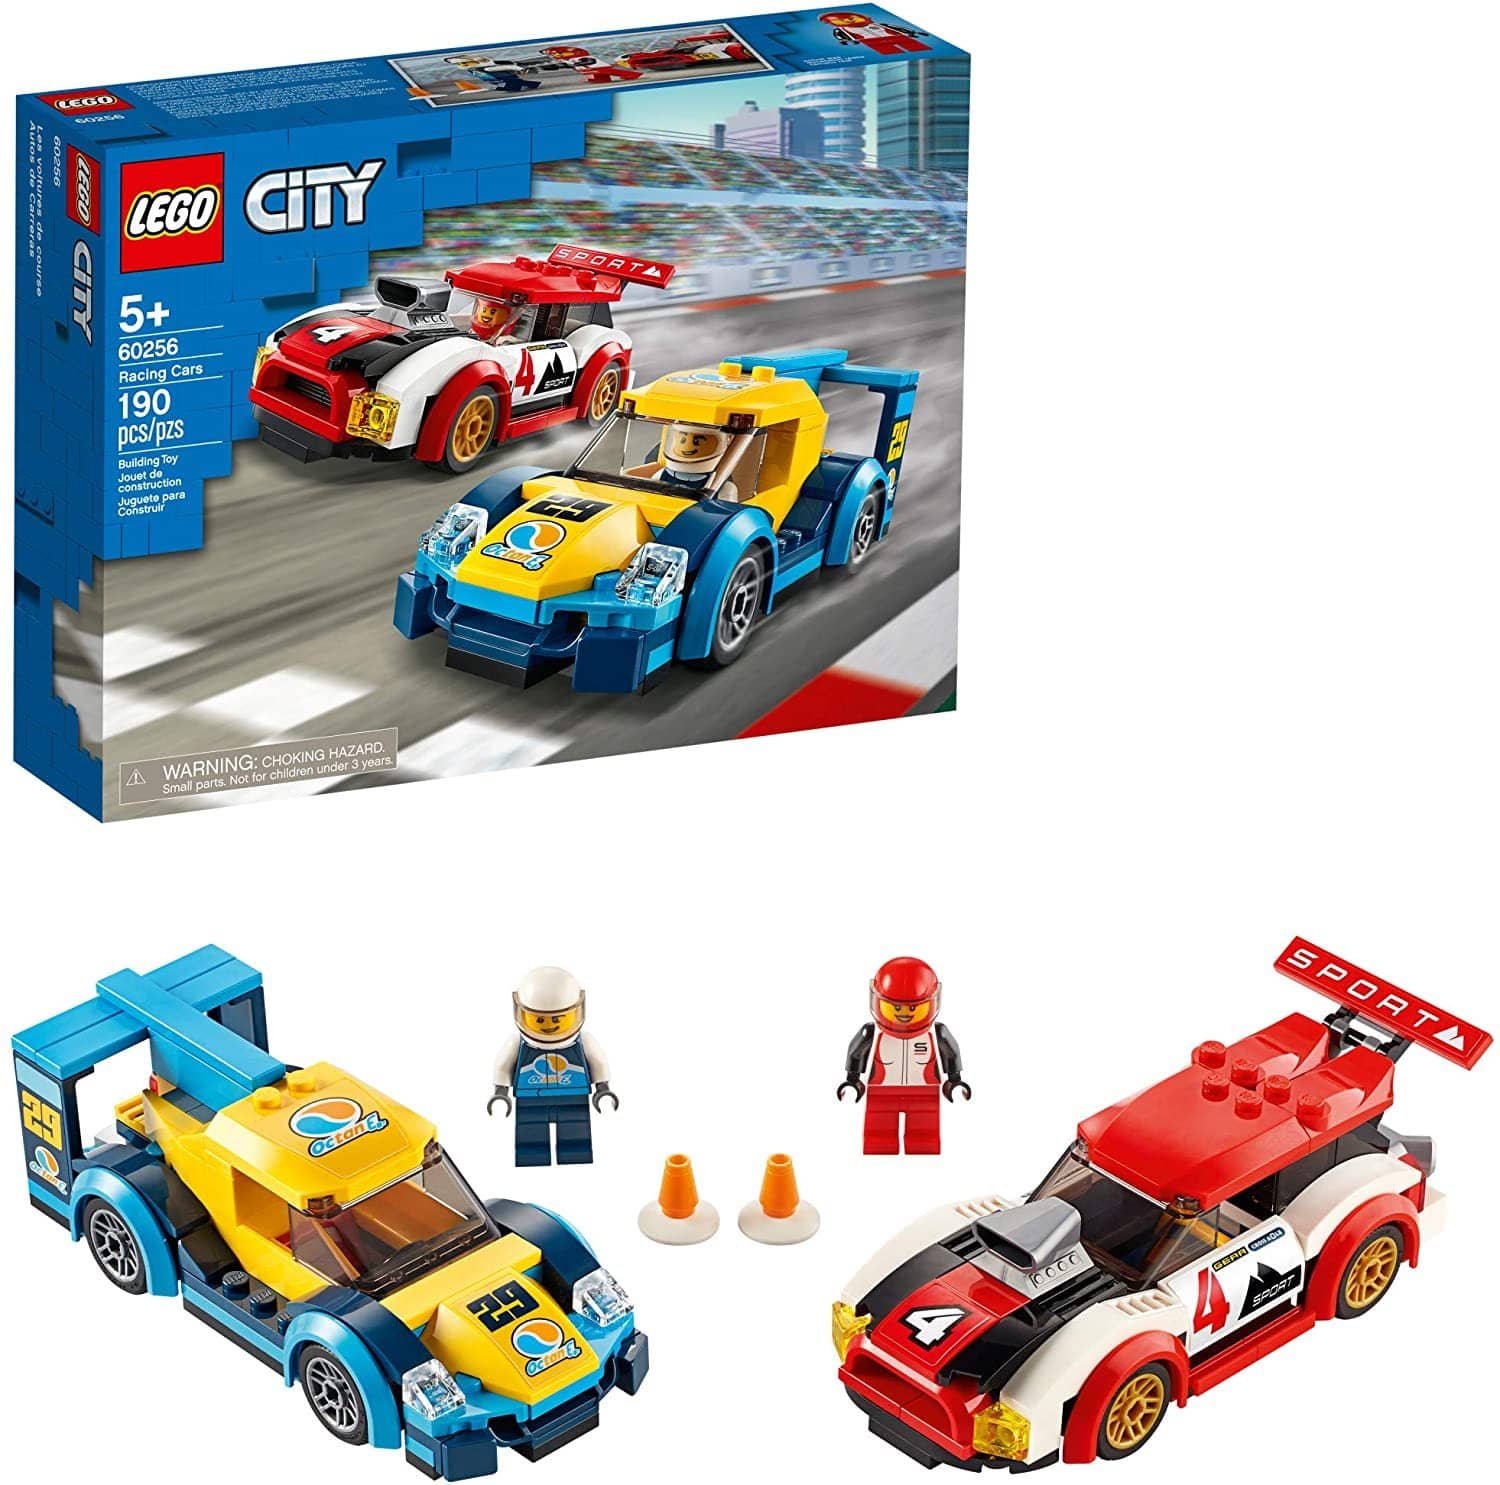 LEGO 60256: City: Racing Cars (190 Pieces)-Kidding Around NYC